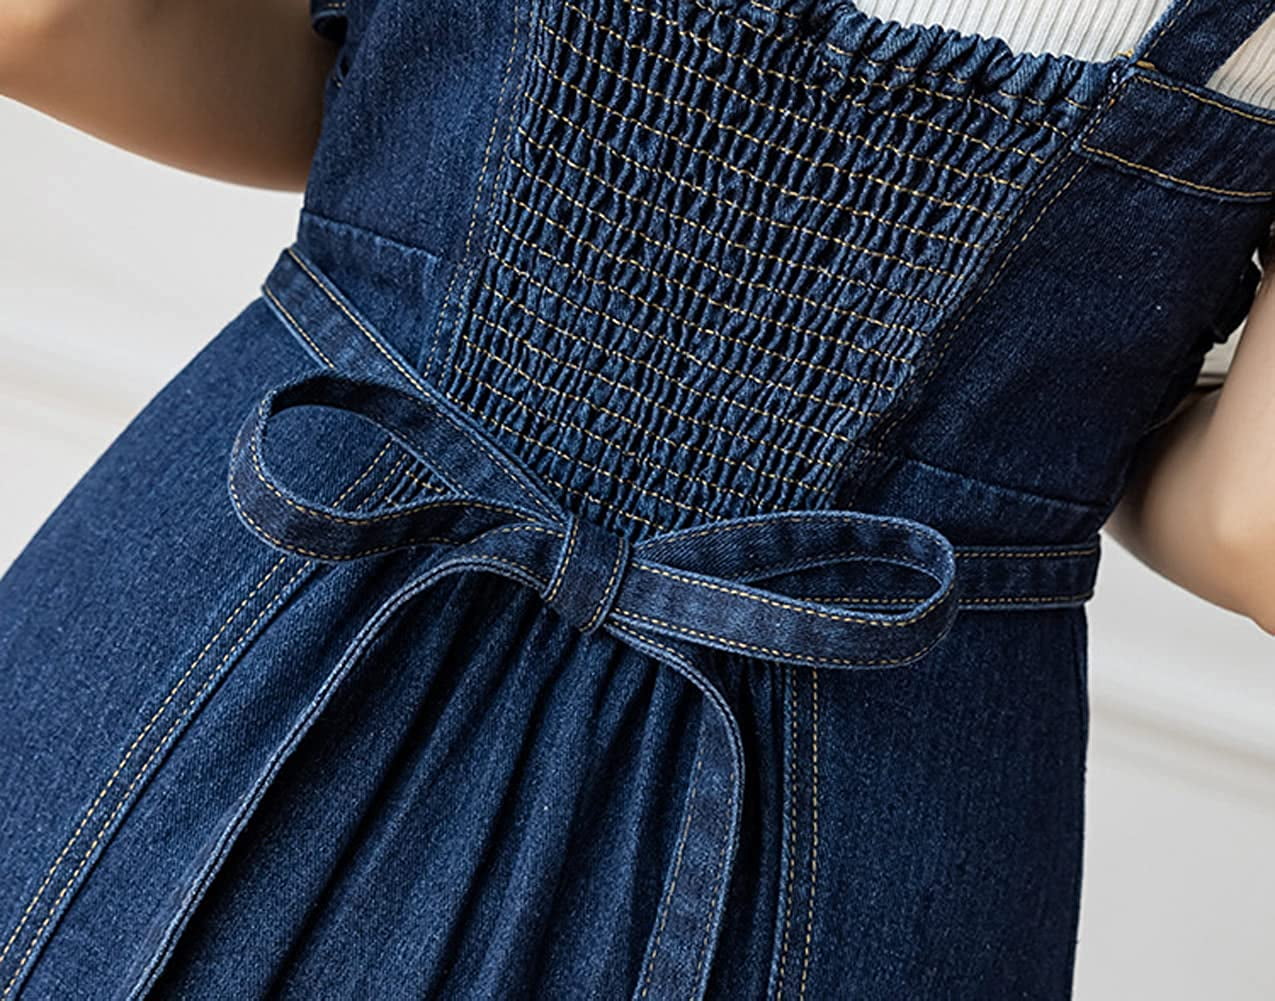 Women's Navy Blue Denim Dress with Straps (inner not included) – Stylestone